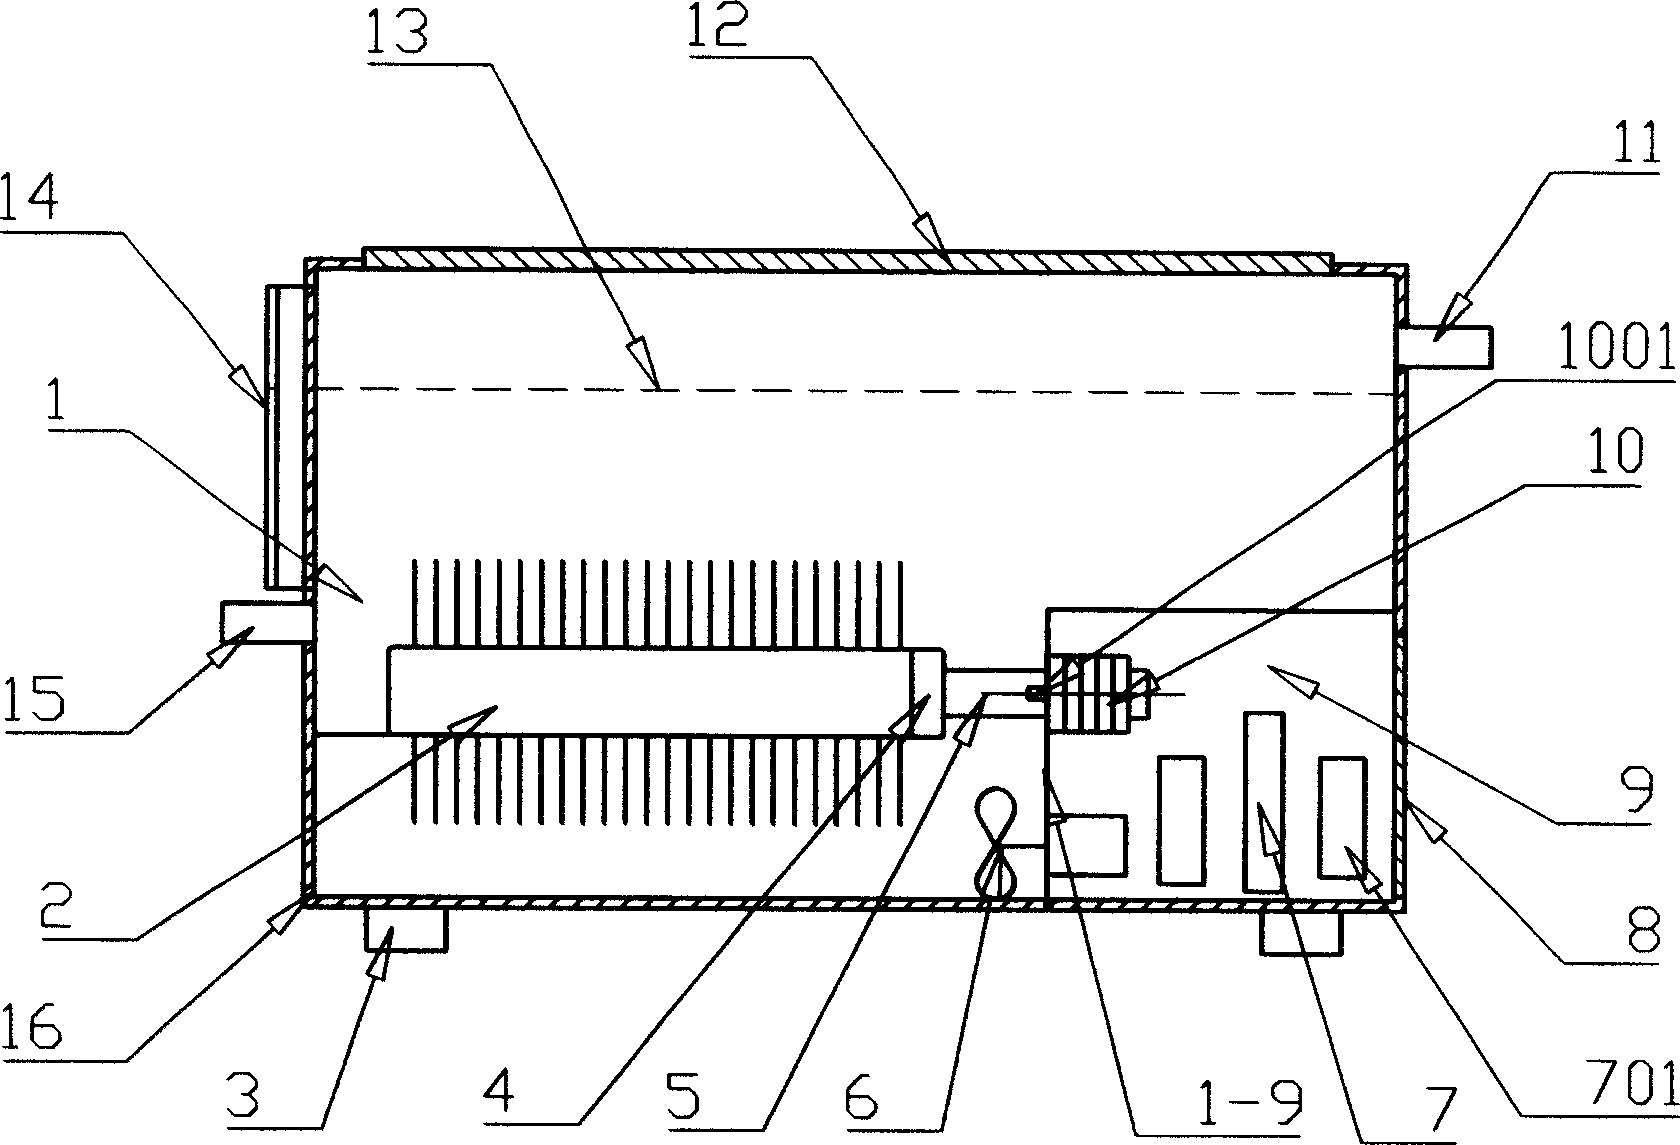 Microwave heater for liquid